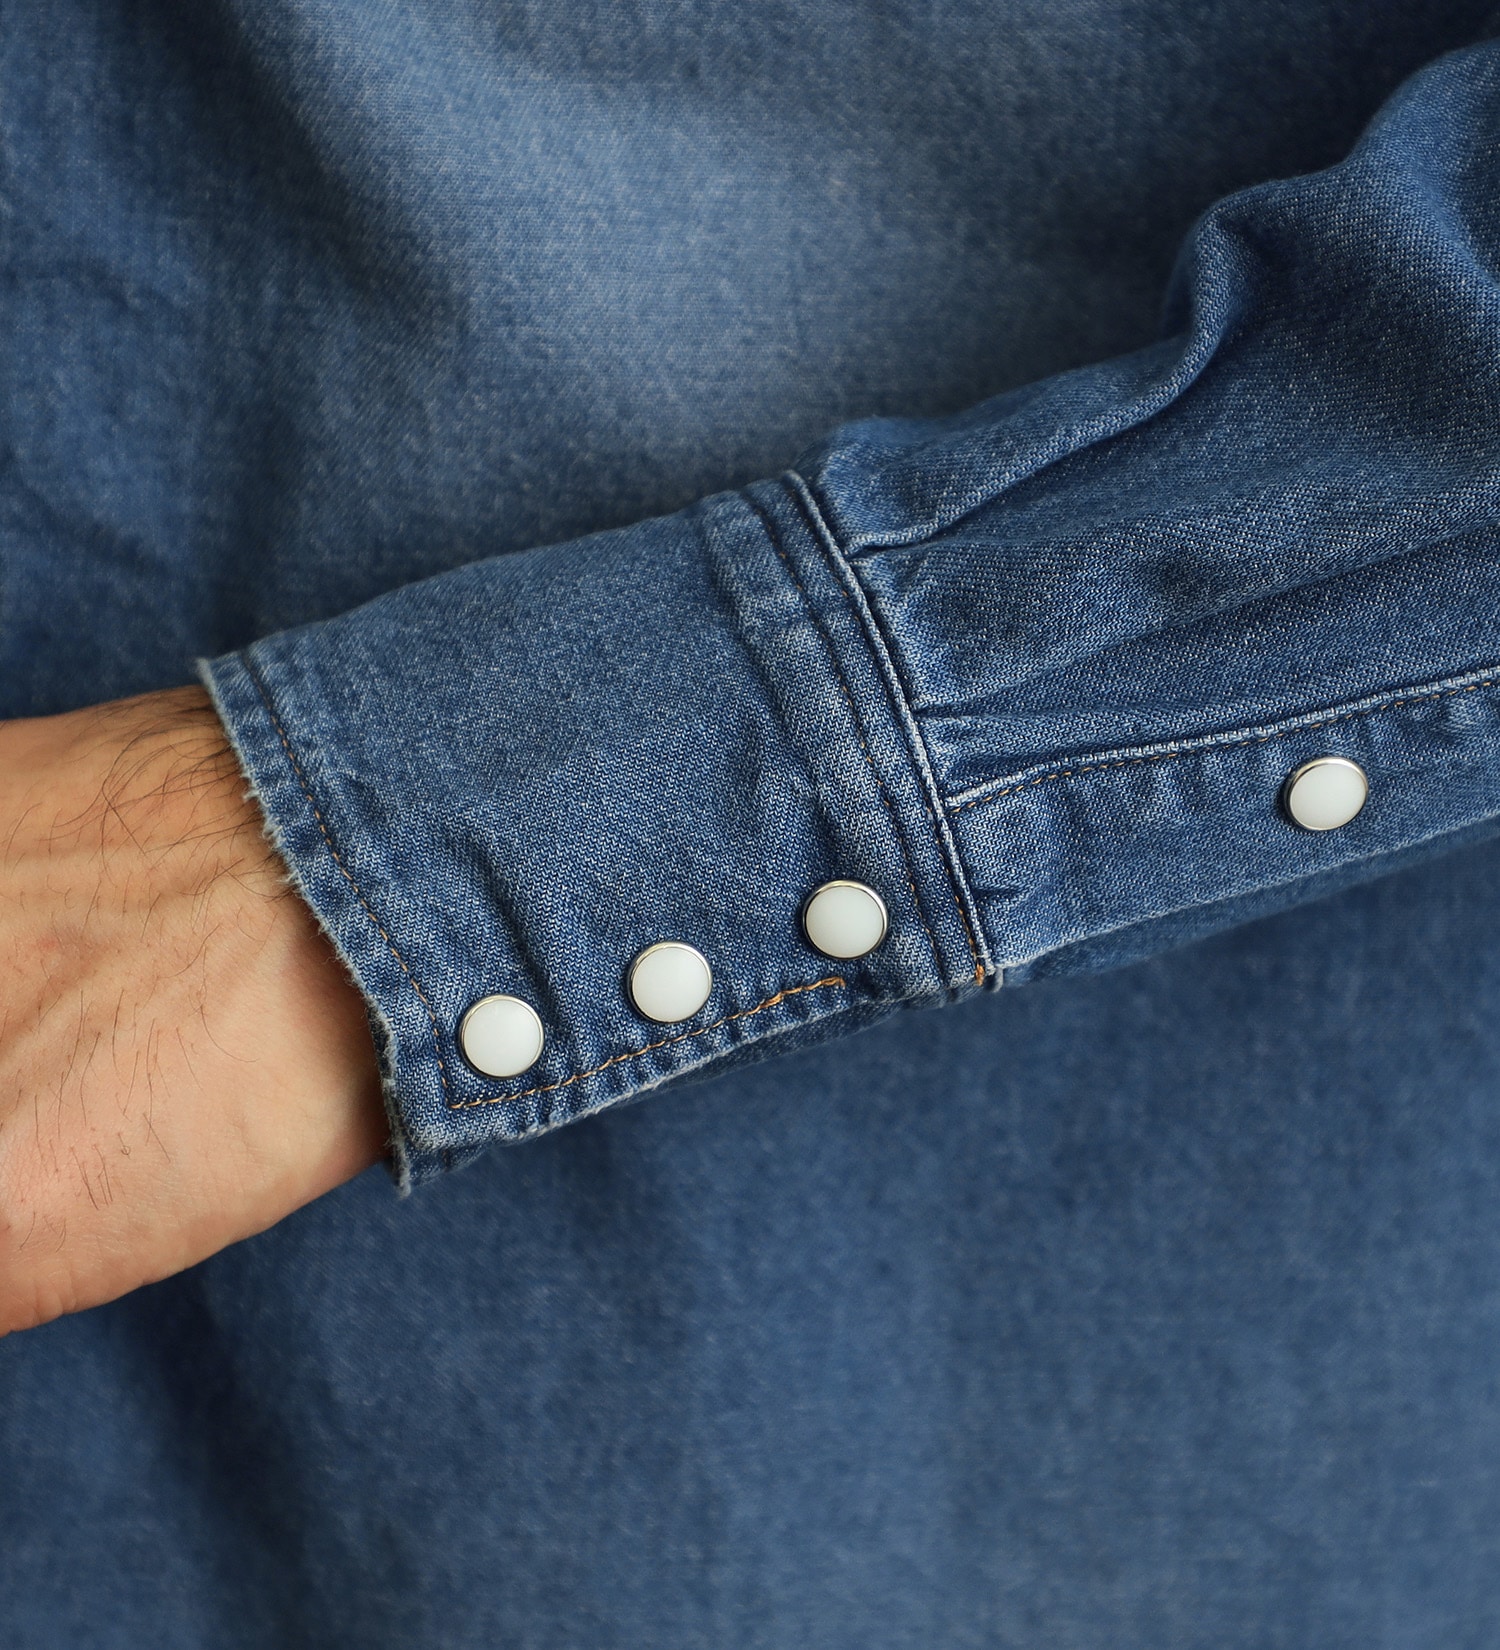 Wrangler(ラングラー)の【カート割対象】【FINAL SALE】【NewJeans着用】SPUR3月号掲載アイテム US ORIGINALS/127MW　デニムシャツ|トップス/シャツ/ブラウス/メンズ|中色ブルー